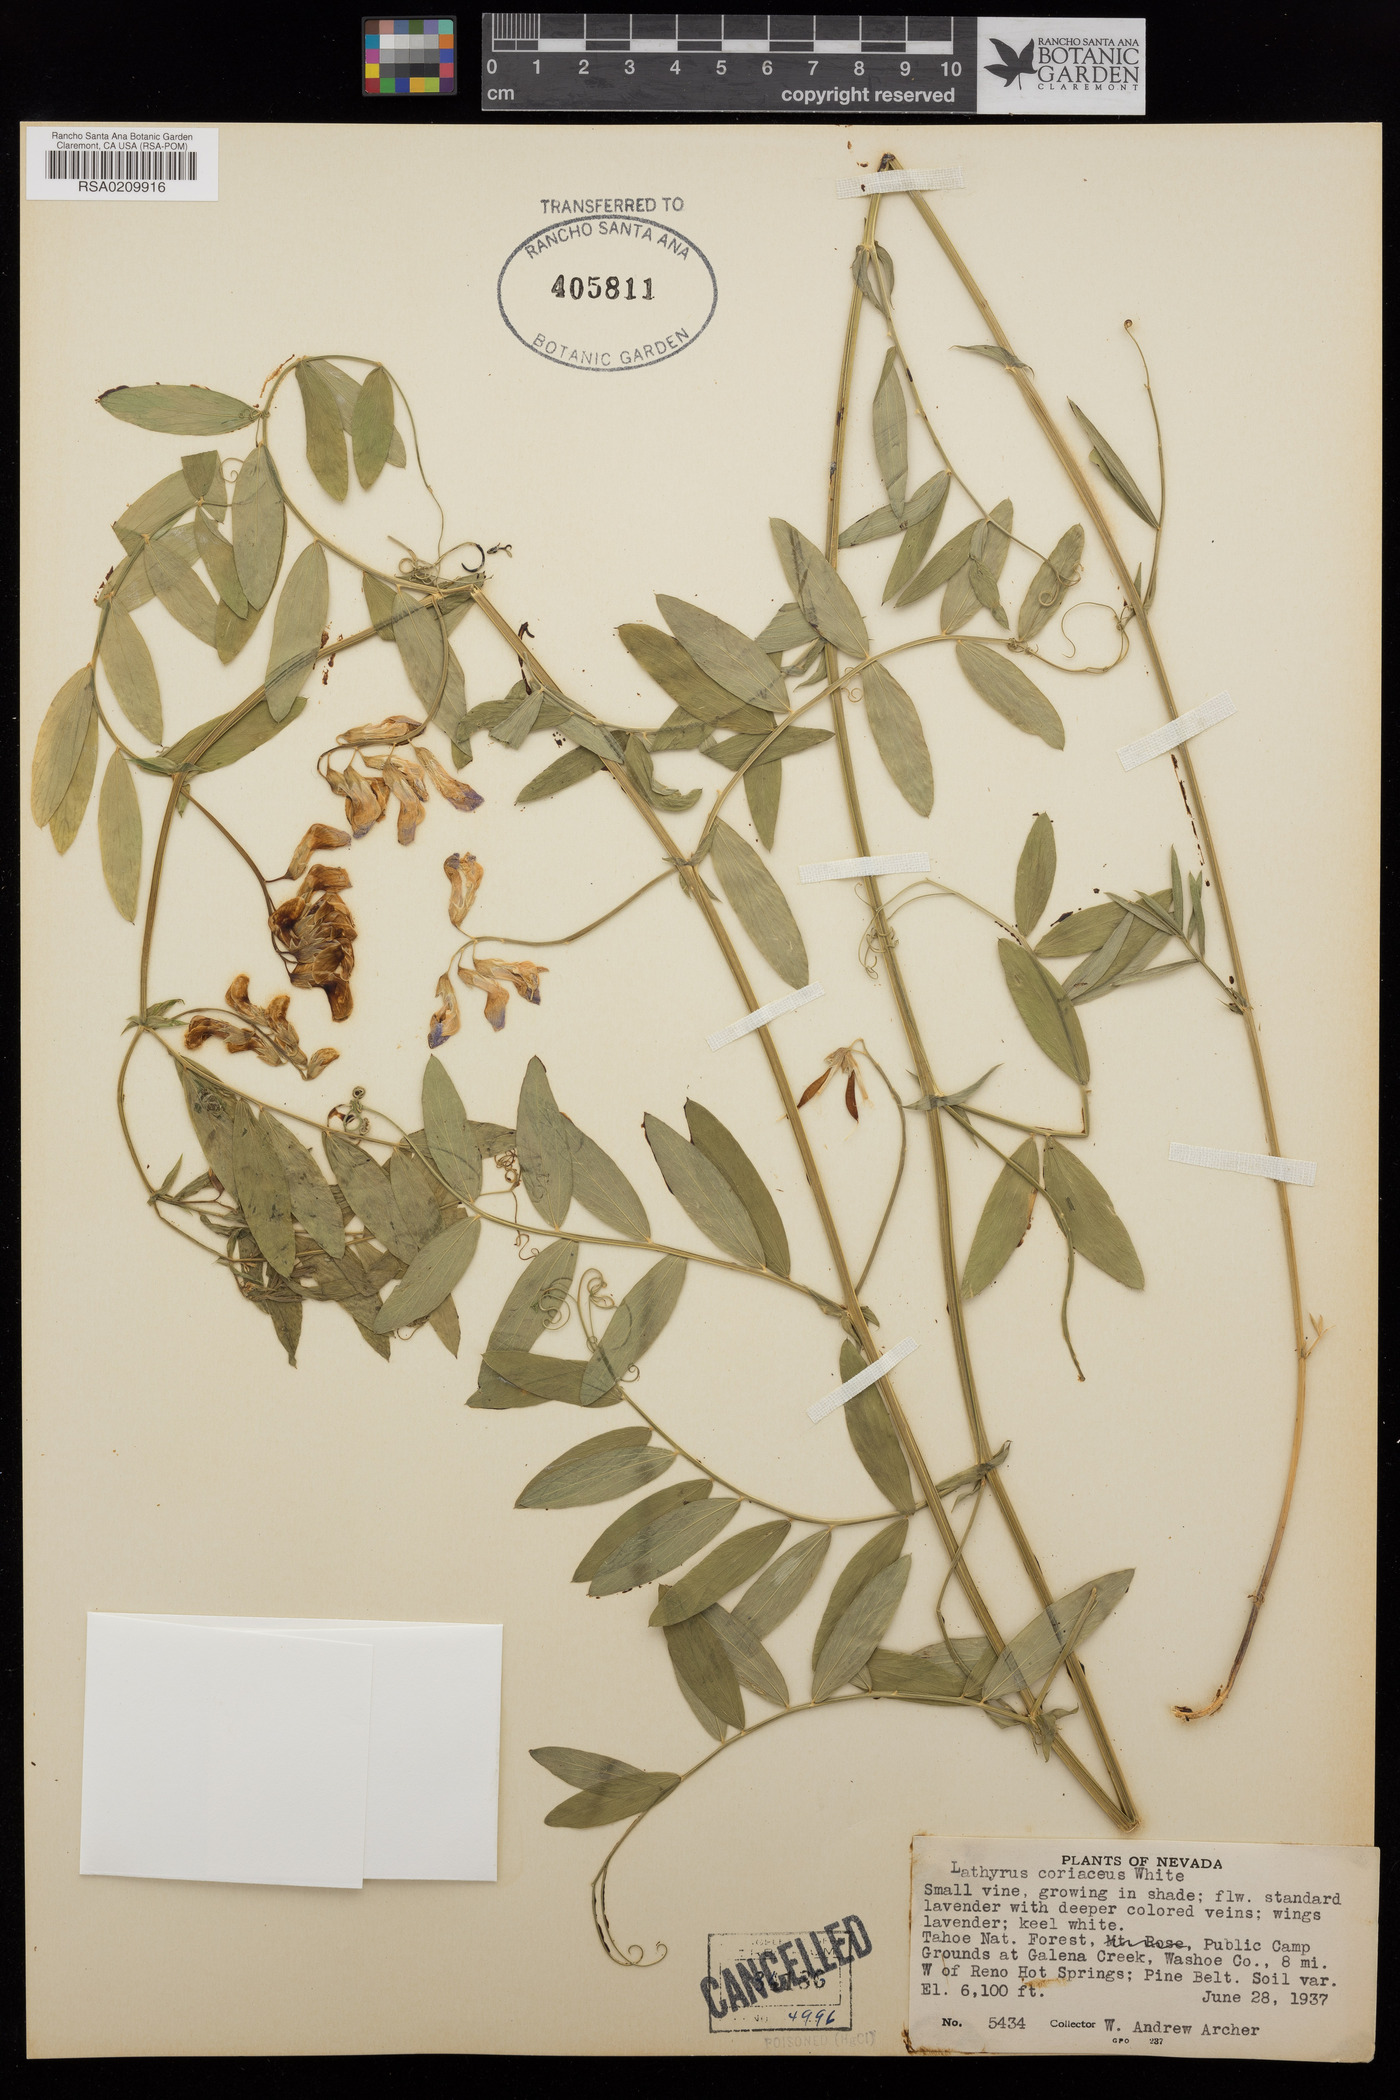 Lathyrus coriaceus image